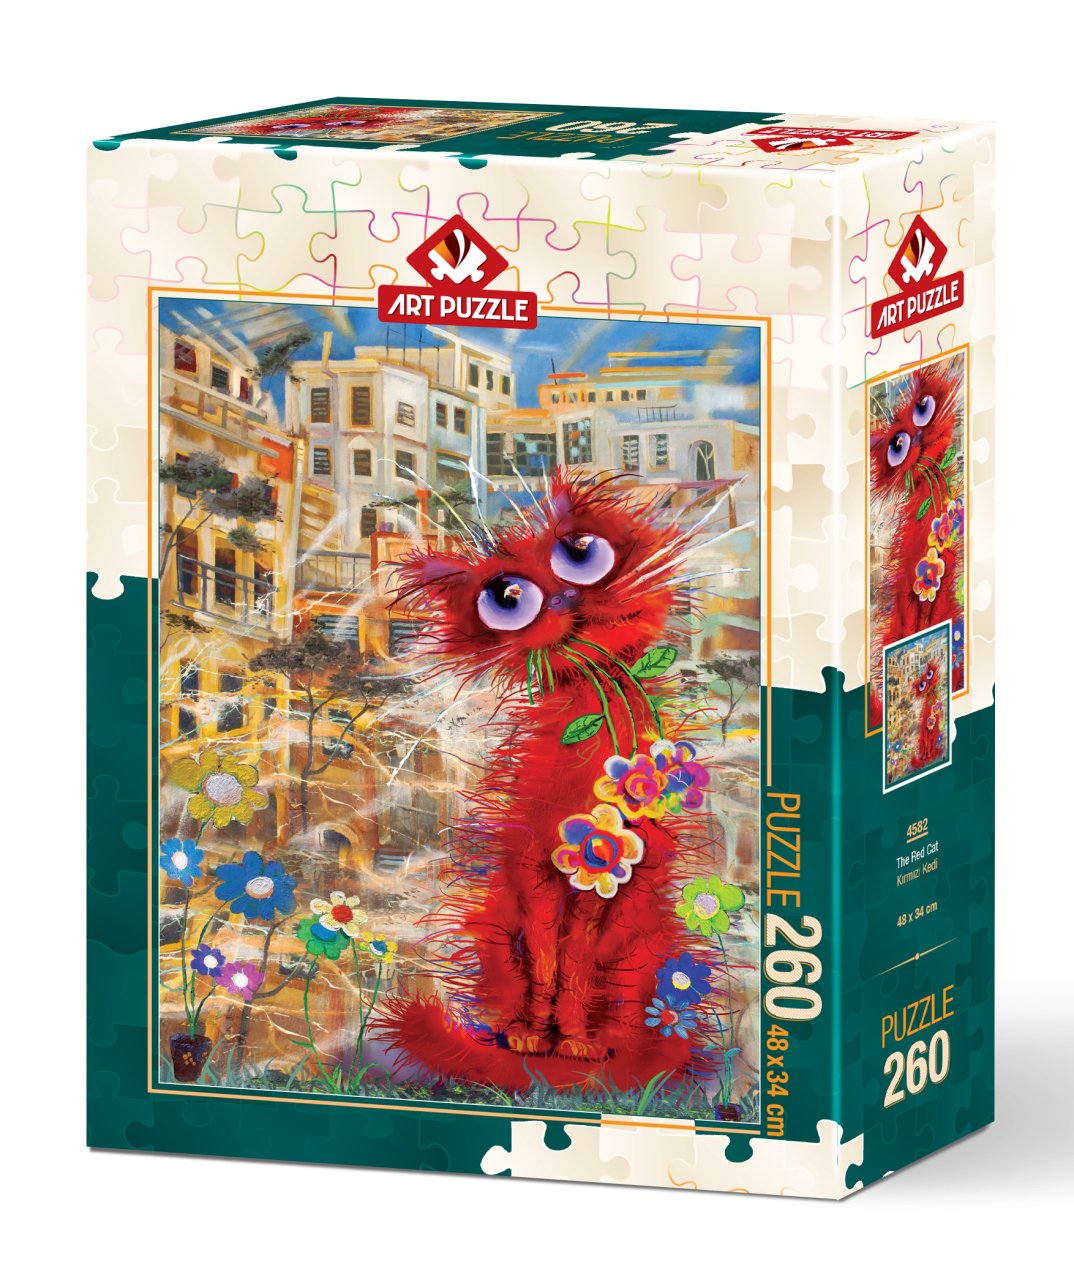 Art Puzzle Rote Katze 260 Teile Puzzle